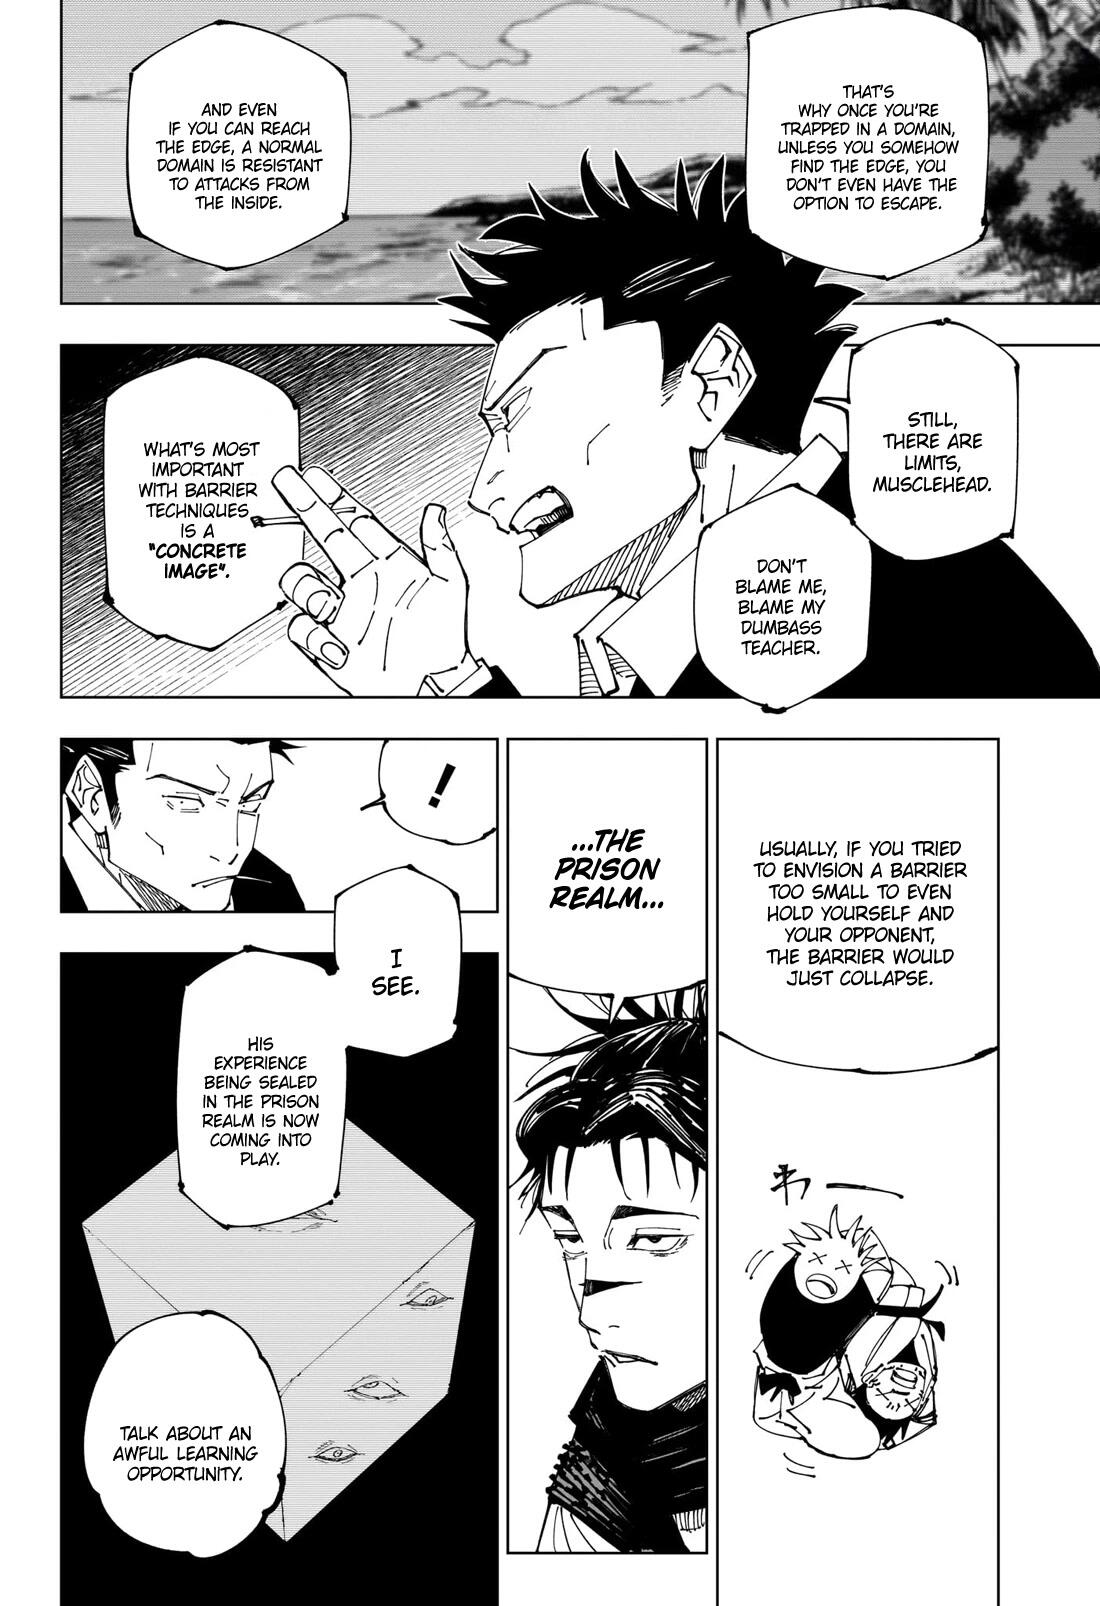 Jujutsu Kaisen Chapter 228: The Decisive Battle In The Uninhabited, Demon-Infested Shinjuku ⑥ page 3 - Mangakakalot